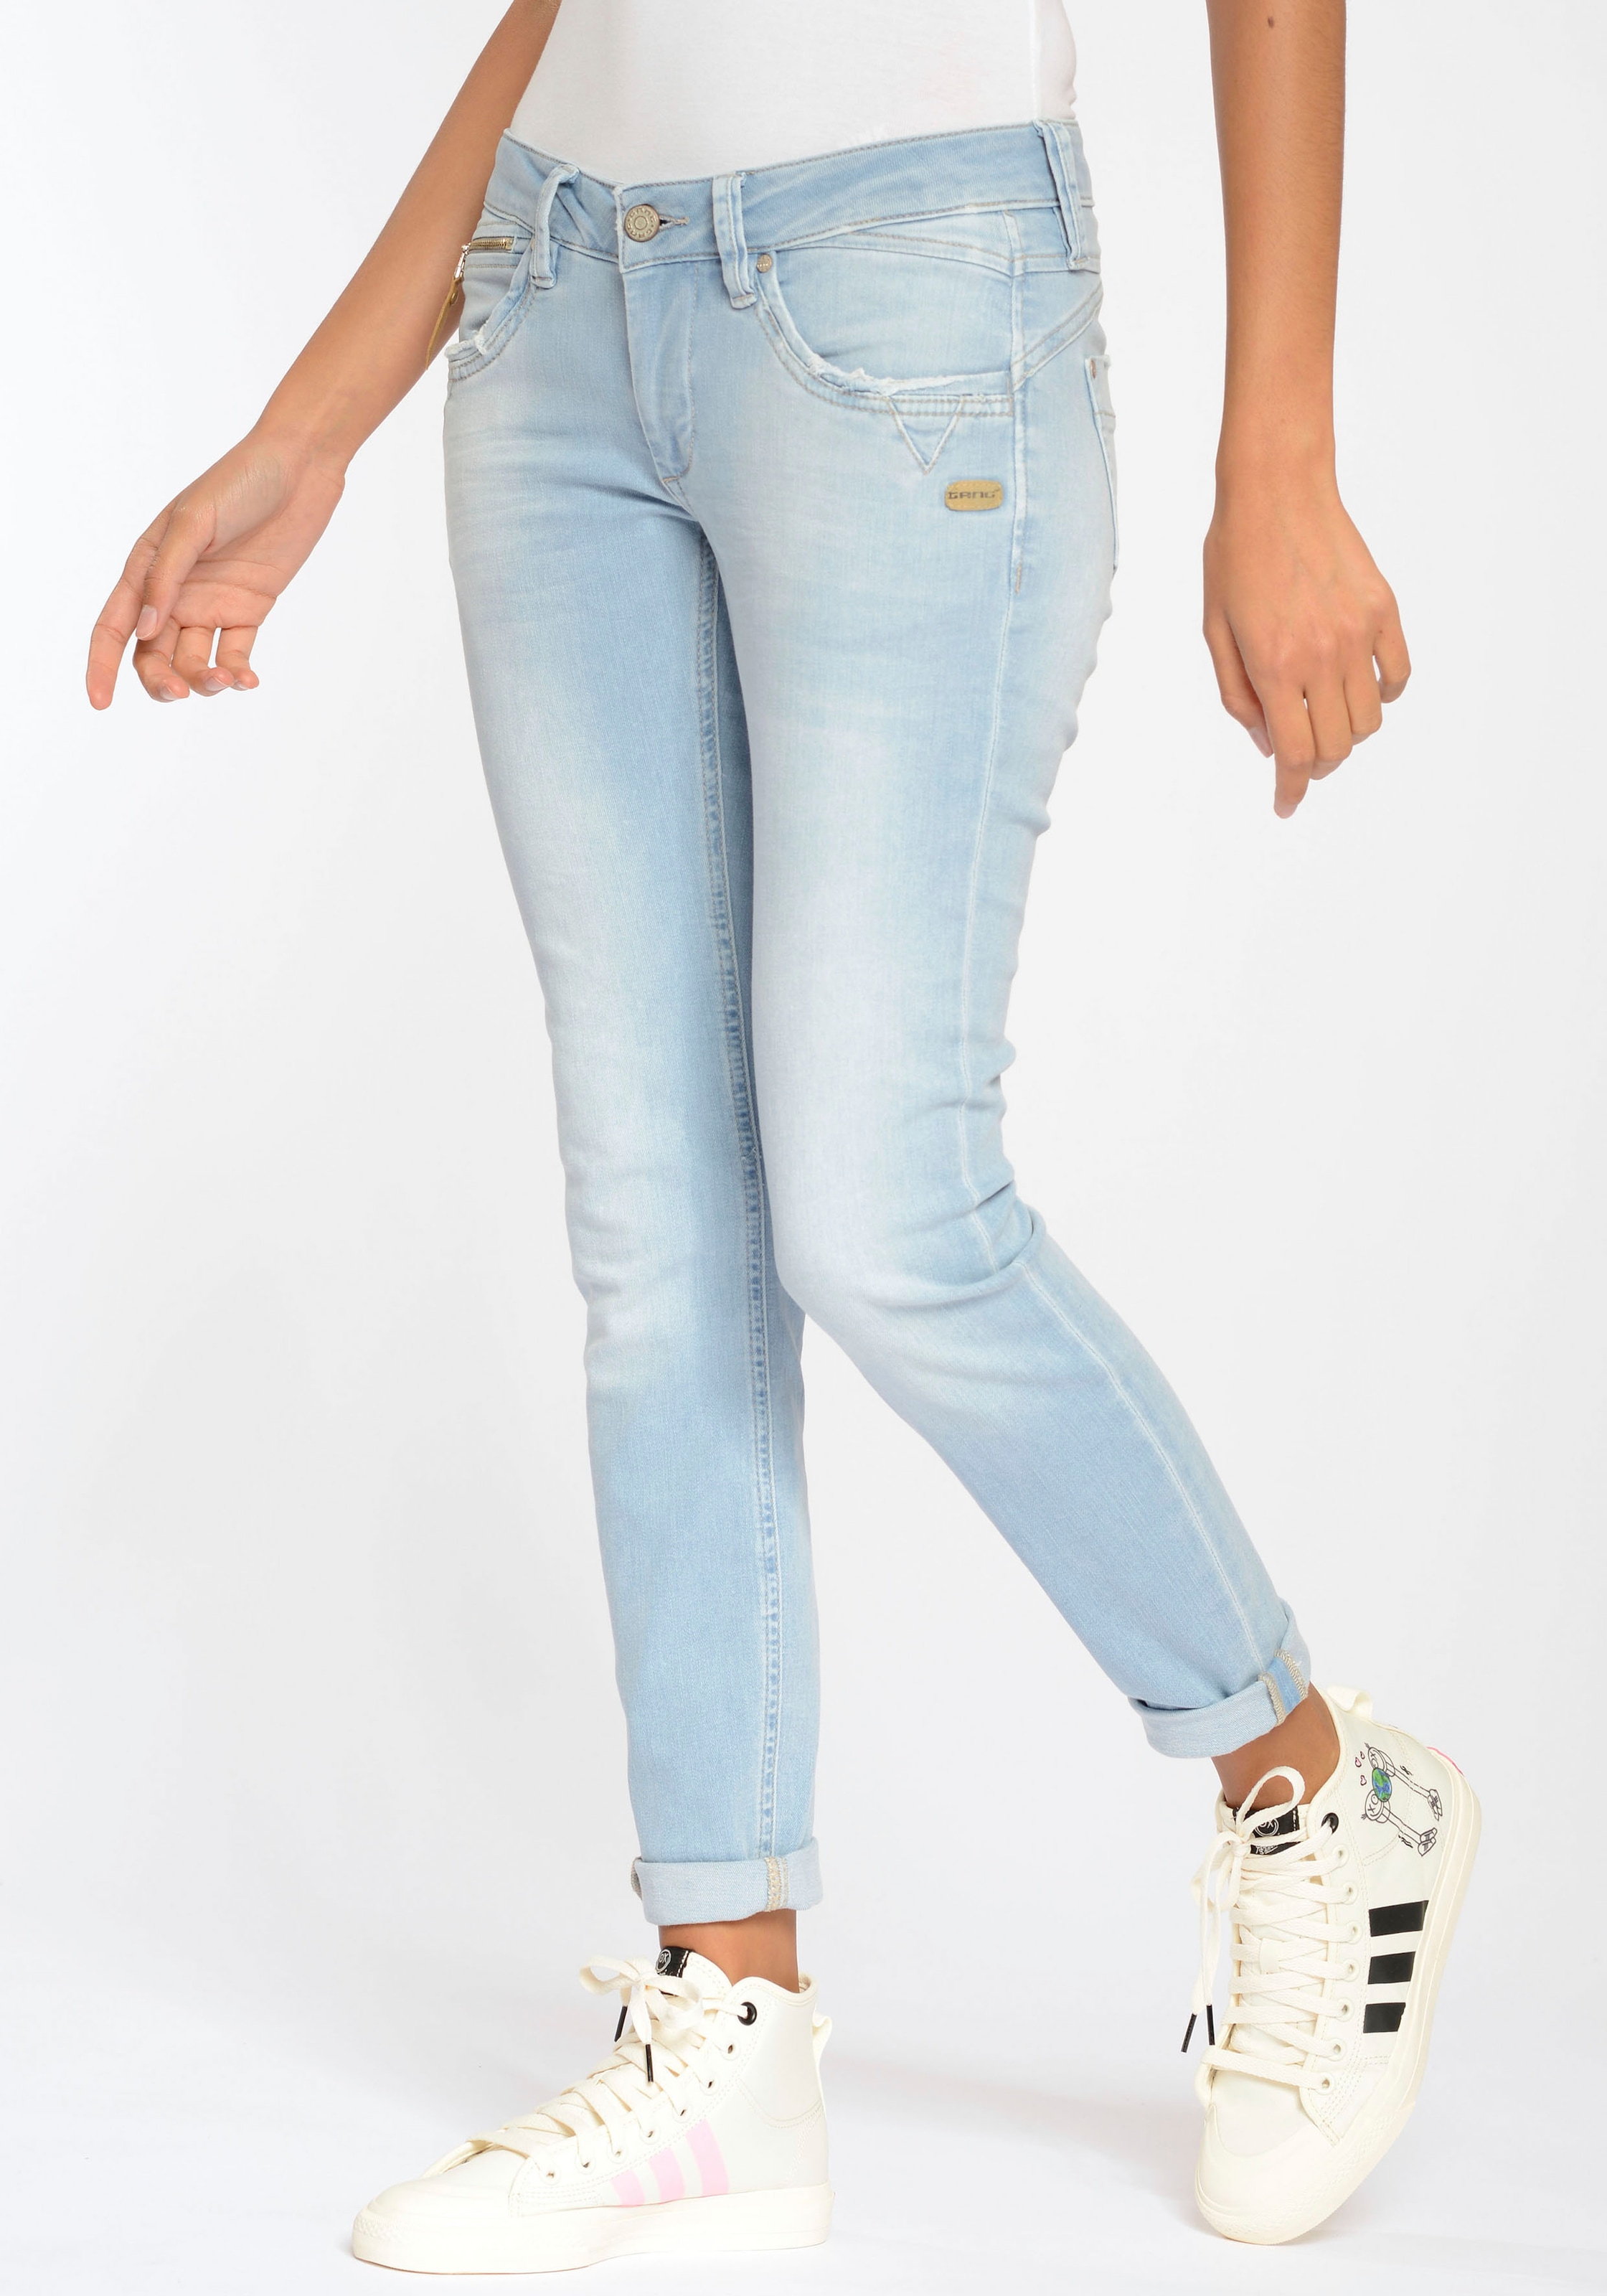 GANG Skinny-fit-Jeans Zipper an V-Förmigen UNIVERSAL Taschen Coinpocket kaufen | »94NIKITA«, mit online u. den Einsätzen